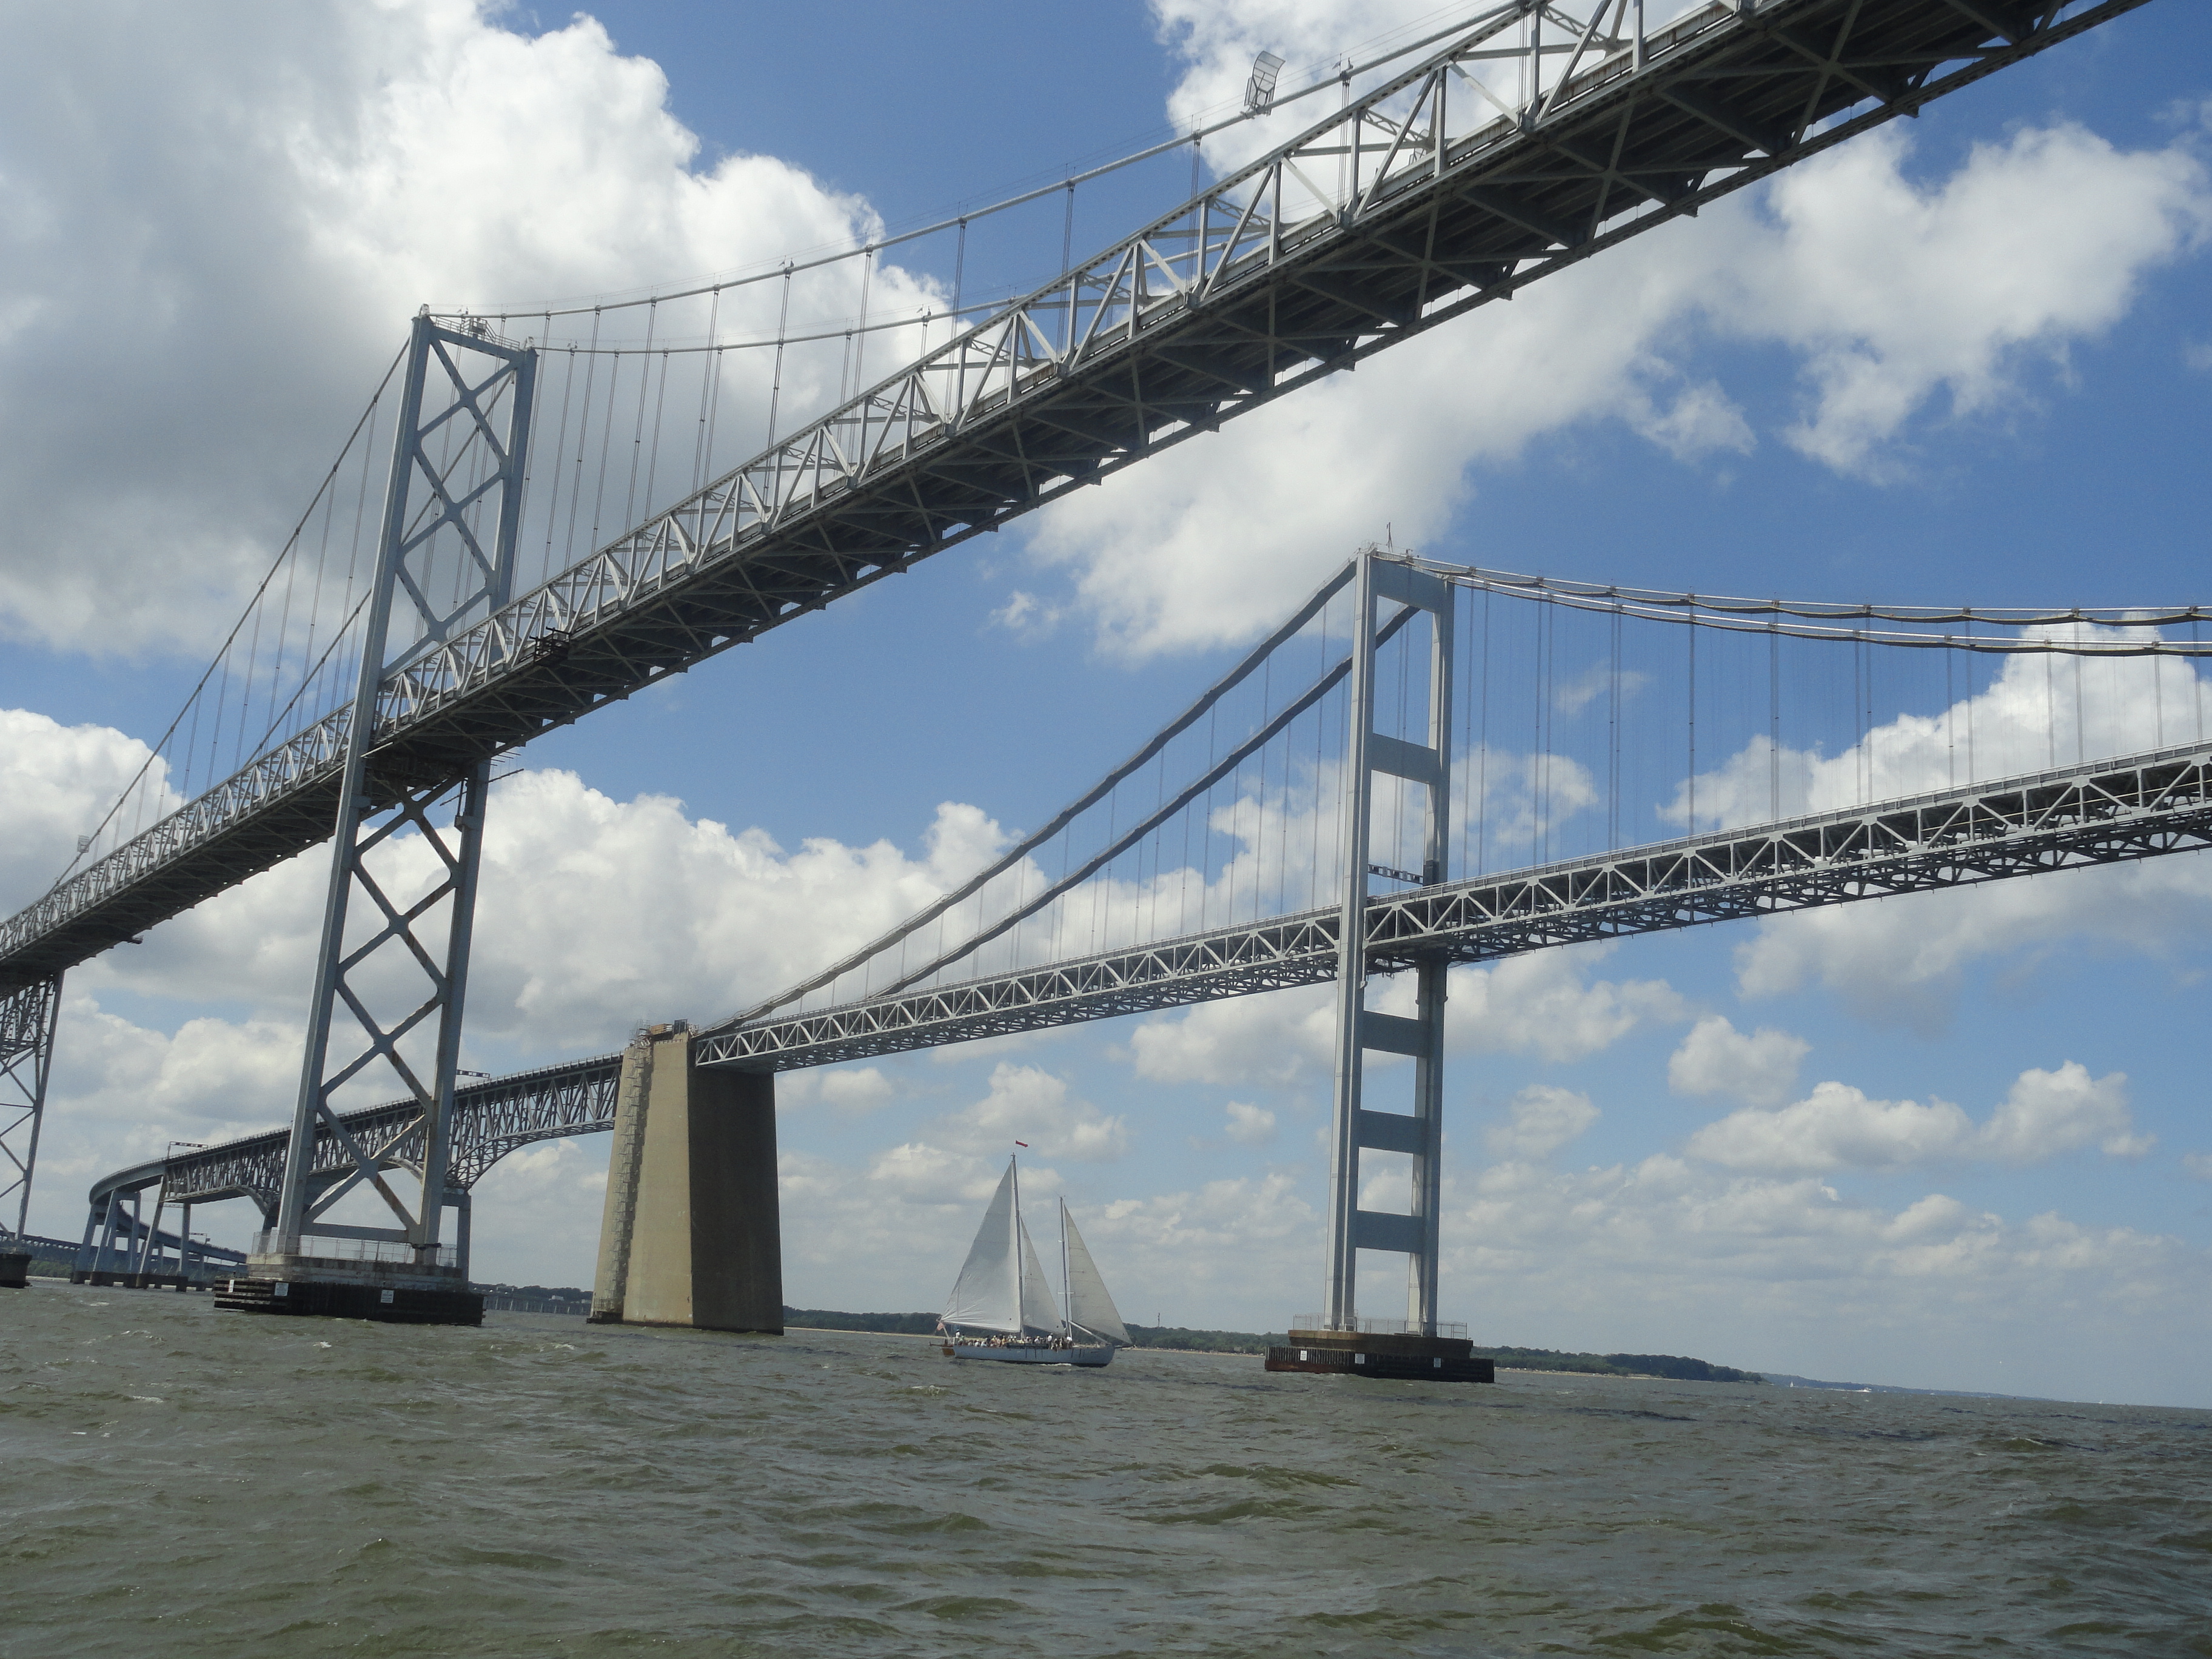 Sailing under the Chesapeake Bay Bridge